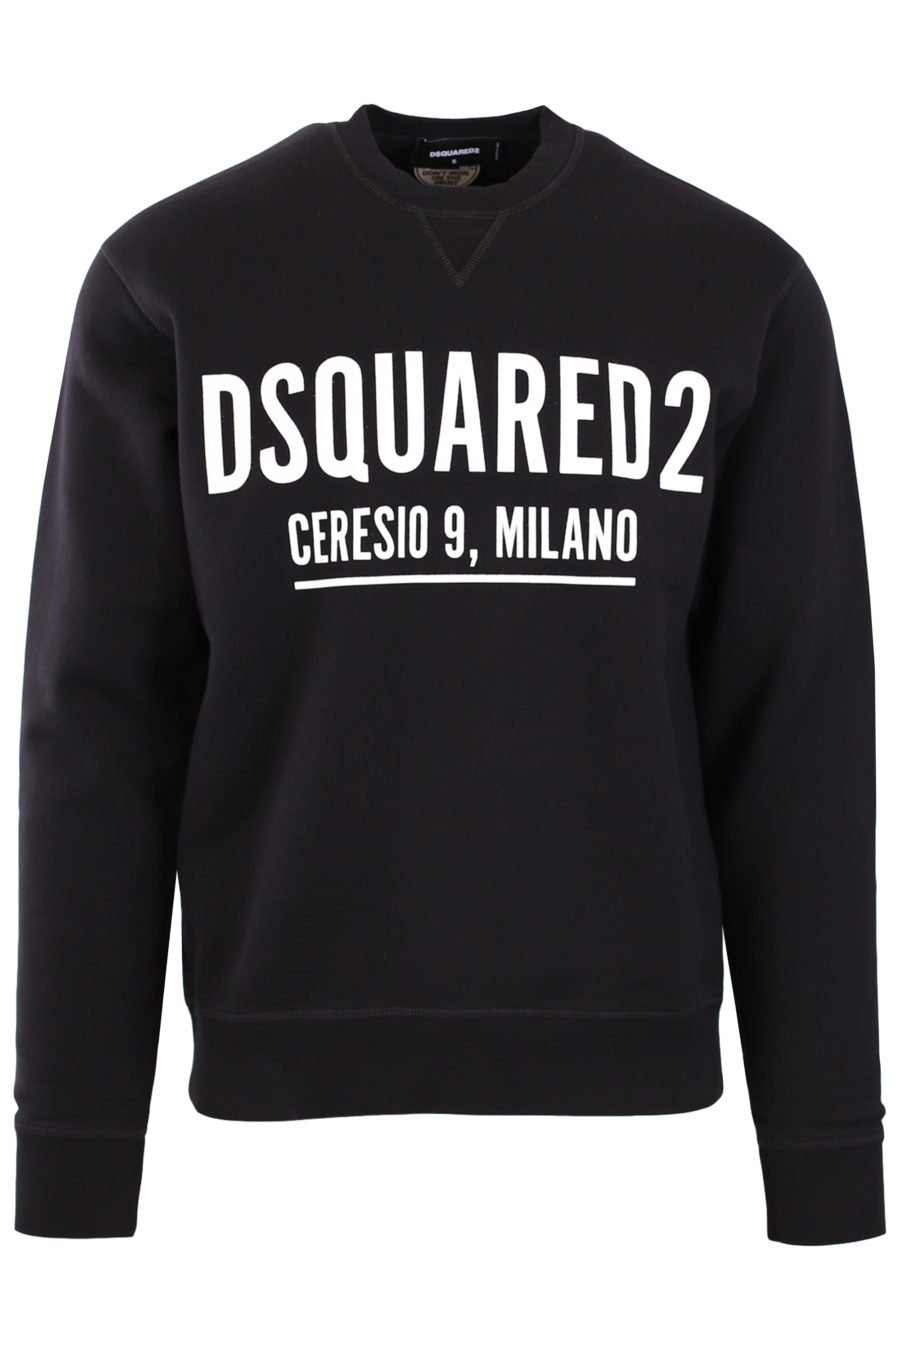 Sudadera negra con logo "Ceresio 9 Milano" - d2e8d5ff022da83719b9db2973c5a108077a2c94